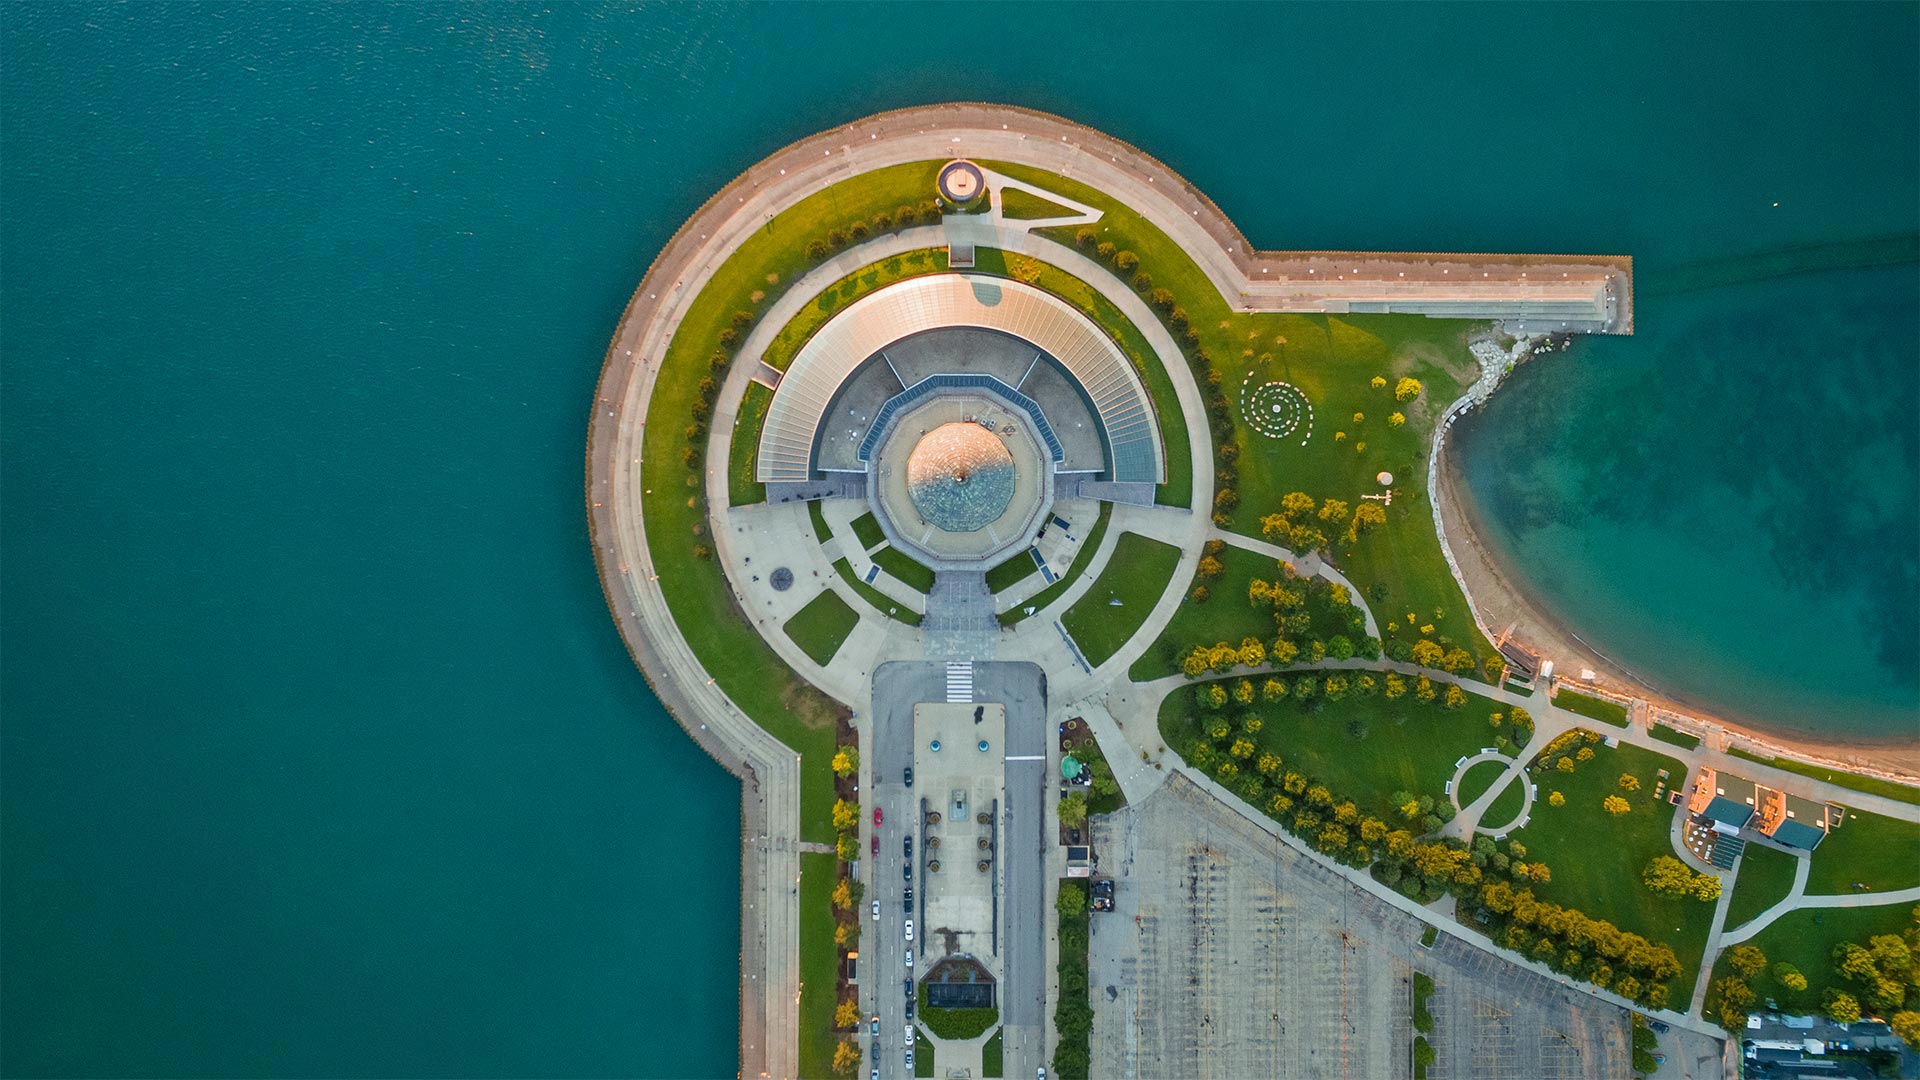 Adler Planetarium near Lake Michigan, Chicago, Illinois - Amazing Aerial Agency/Offset by Shutterstock)